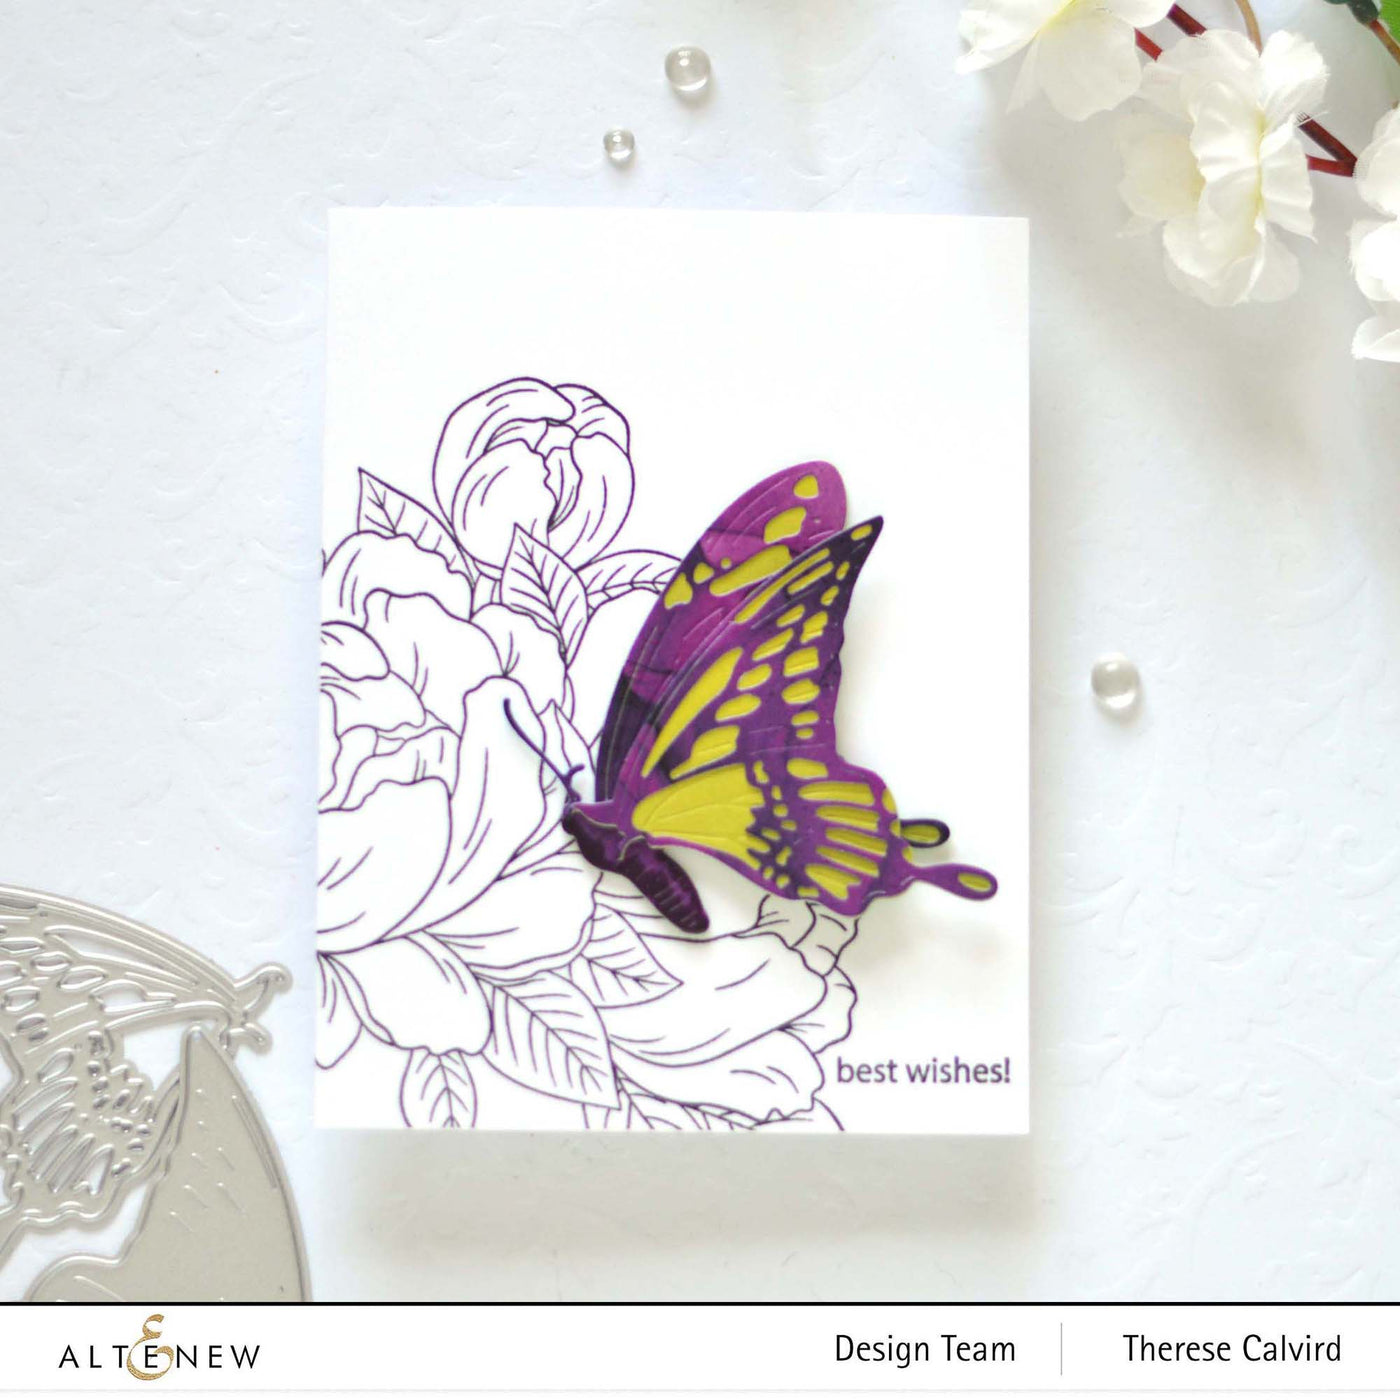 Part A-Glitz Art Craft Co.,LTD Dies Swallowtail Butterfly Die Set